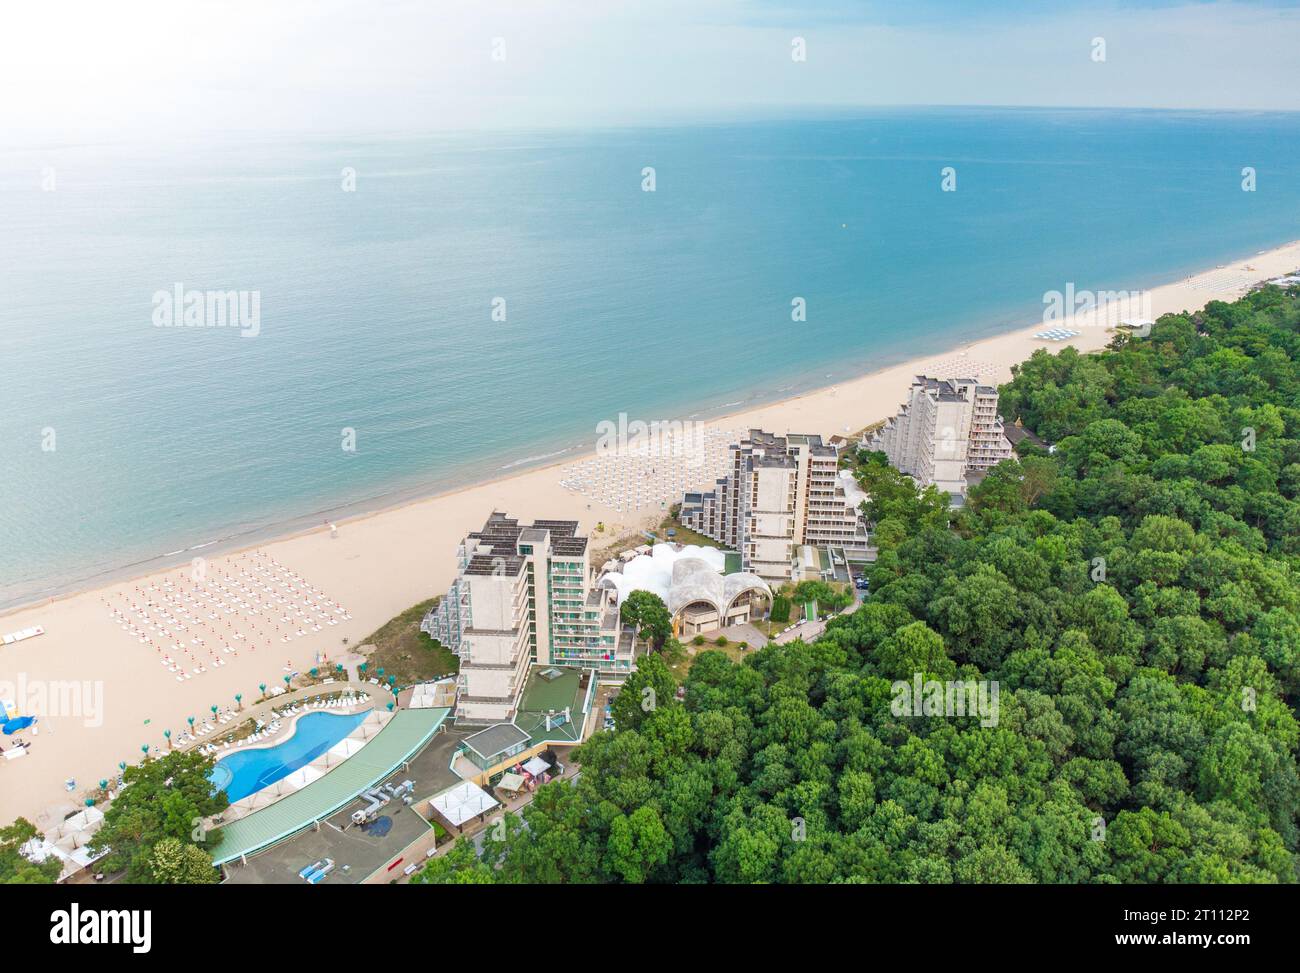 Blick von oben auf Albena leeres Sandstrand Resort, Bulgarien Stockfoto